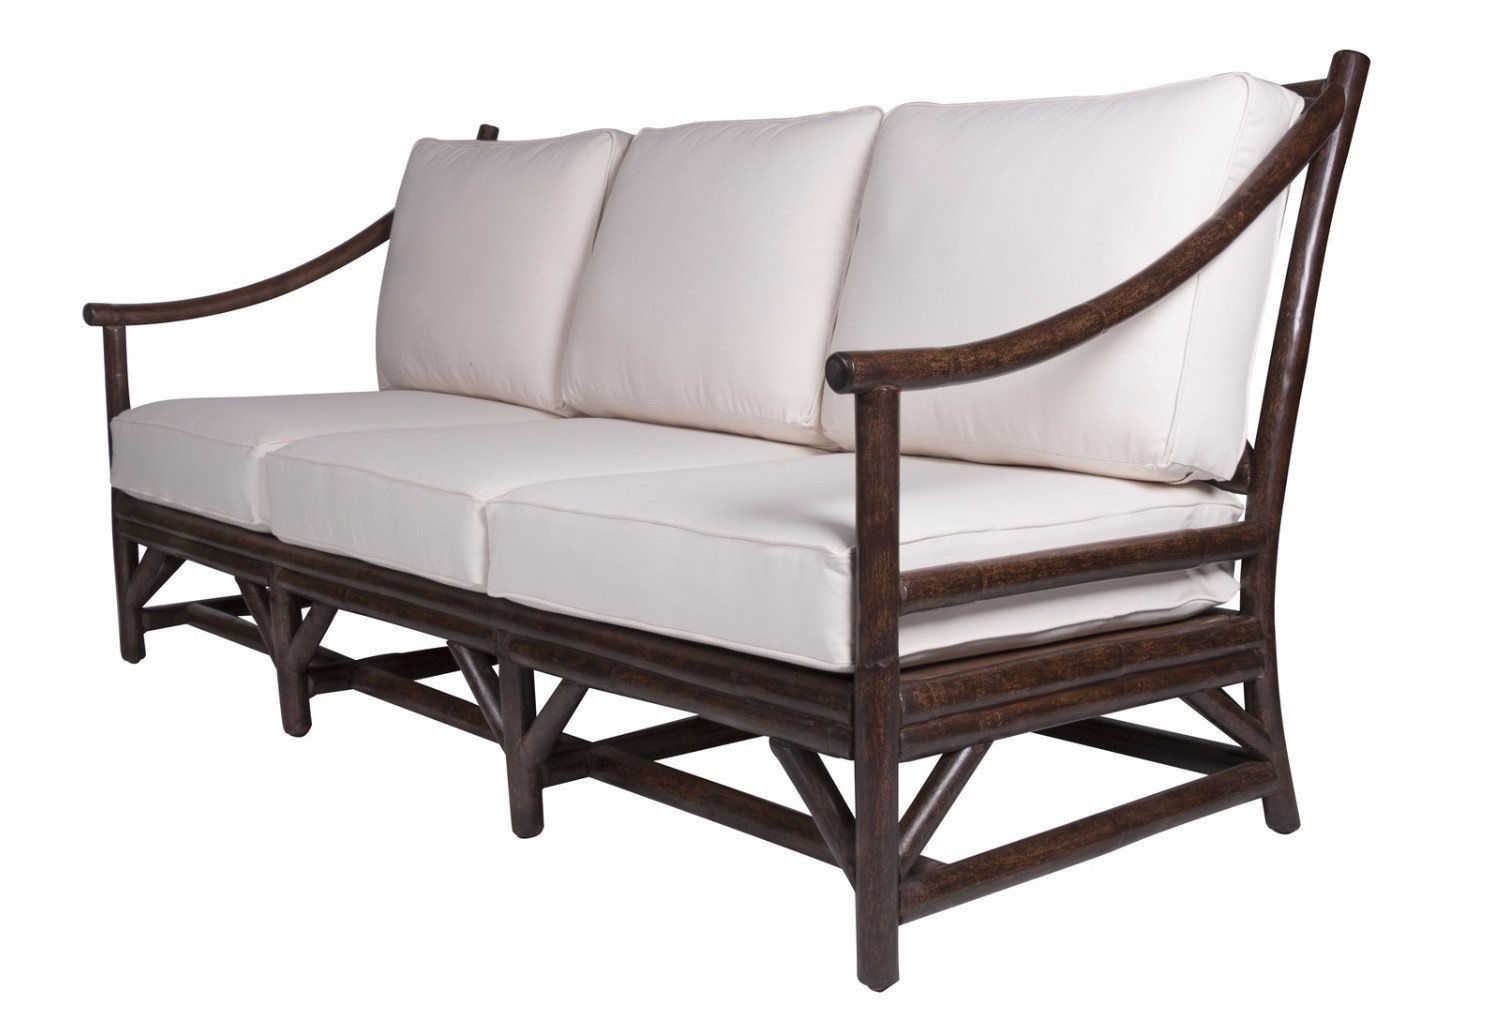 Designer Wicker & Rattan By Tribor Woodland Sofa by Designer Wicker from Tribor Sofa - Rattan Imports